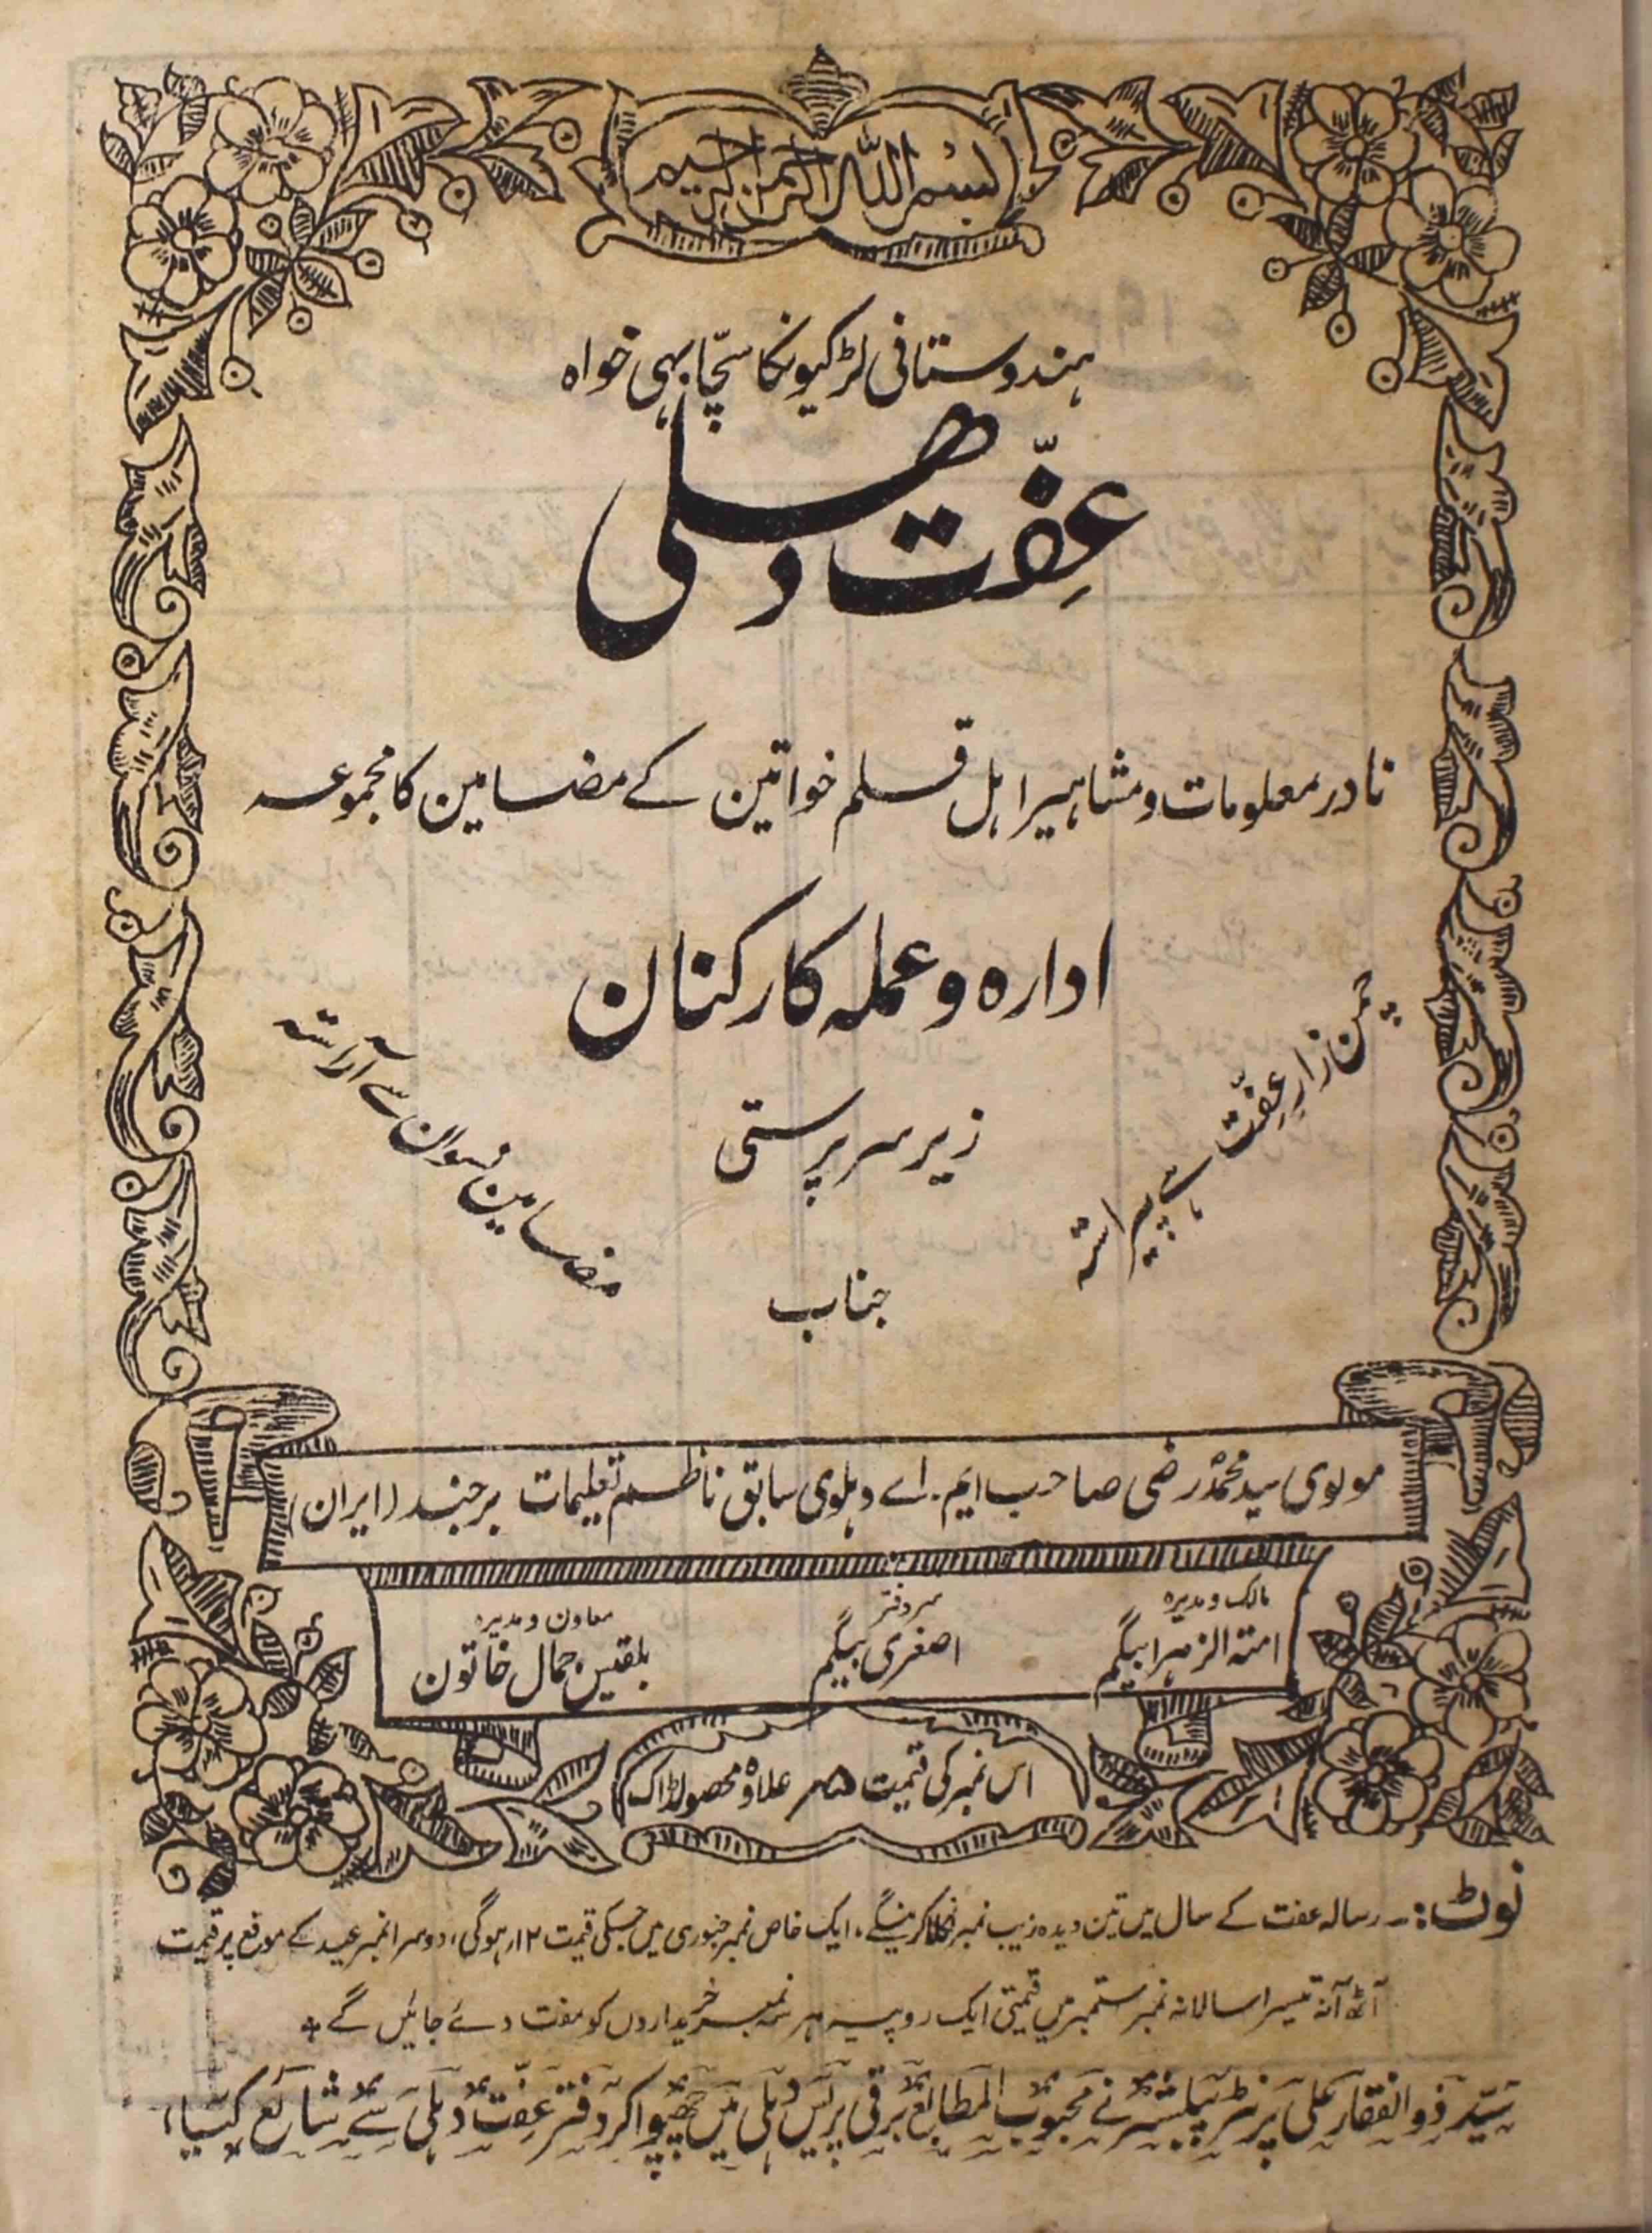 Iffat- Magazine by Abdul Waheed Khan, Idara Khawateen, Lahore, Syed Abdurraheem, Syed Zulfiqar Ali 